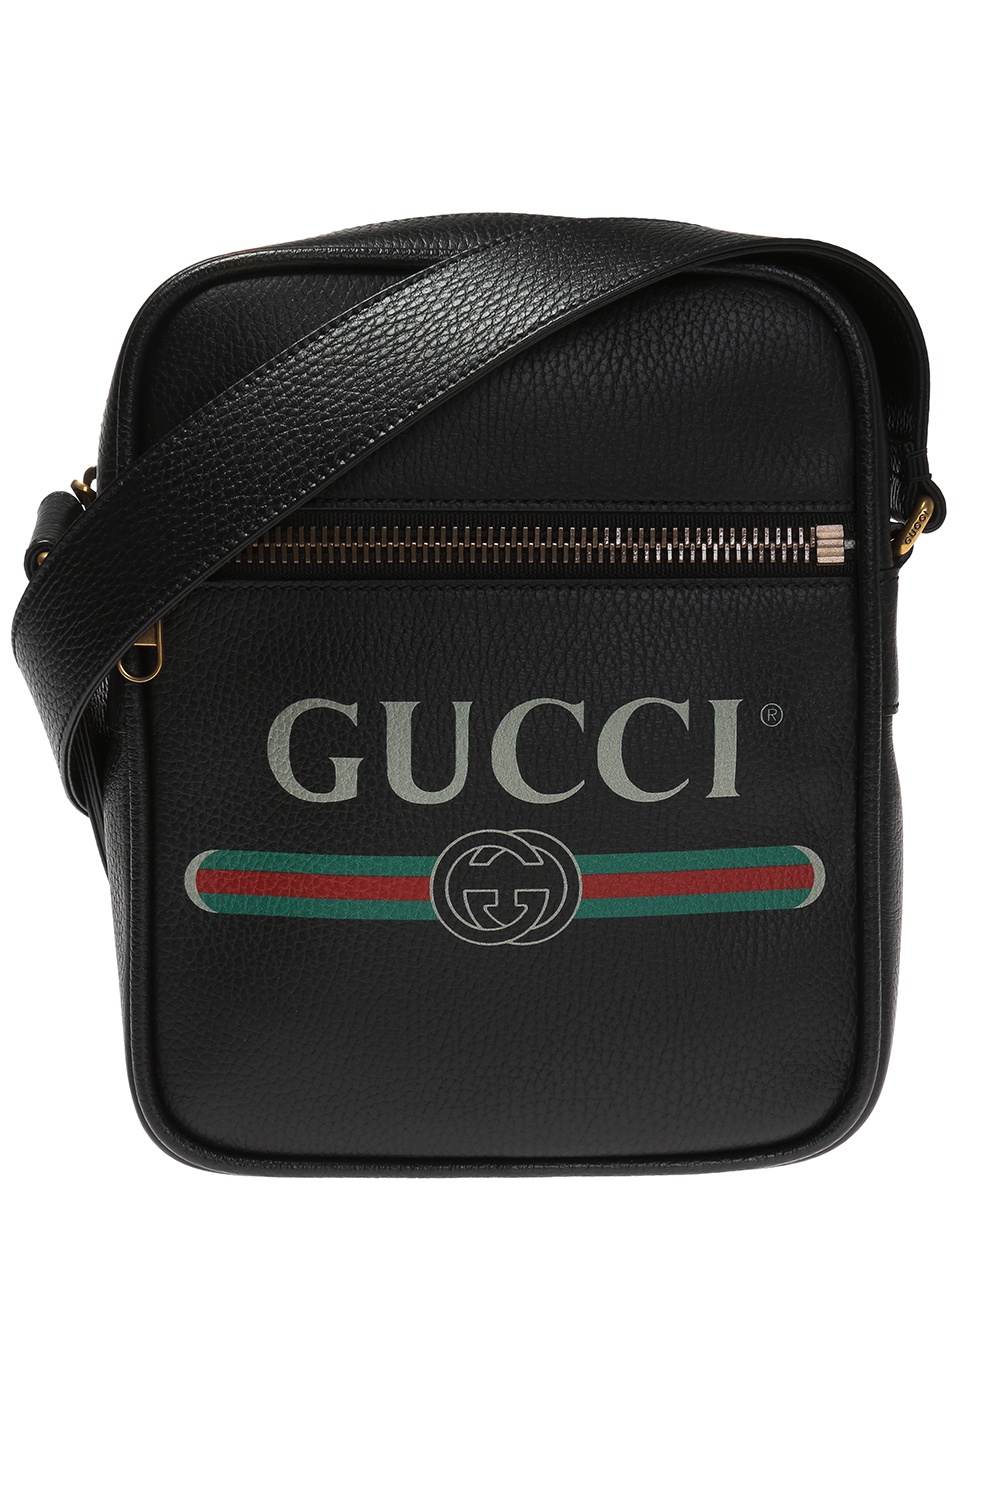 gucci logo shoulder bag